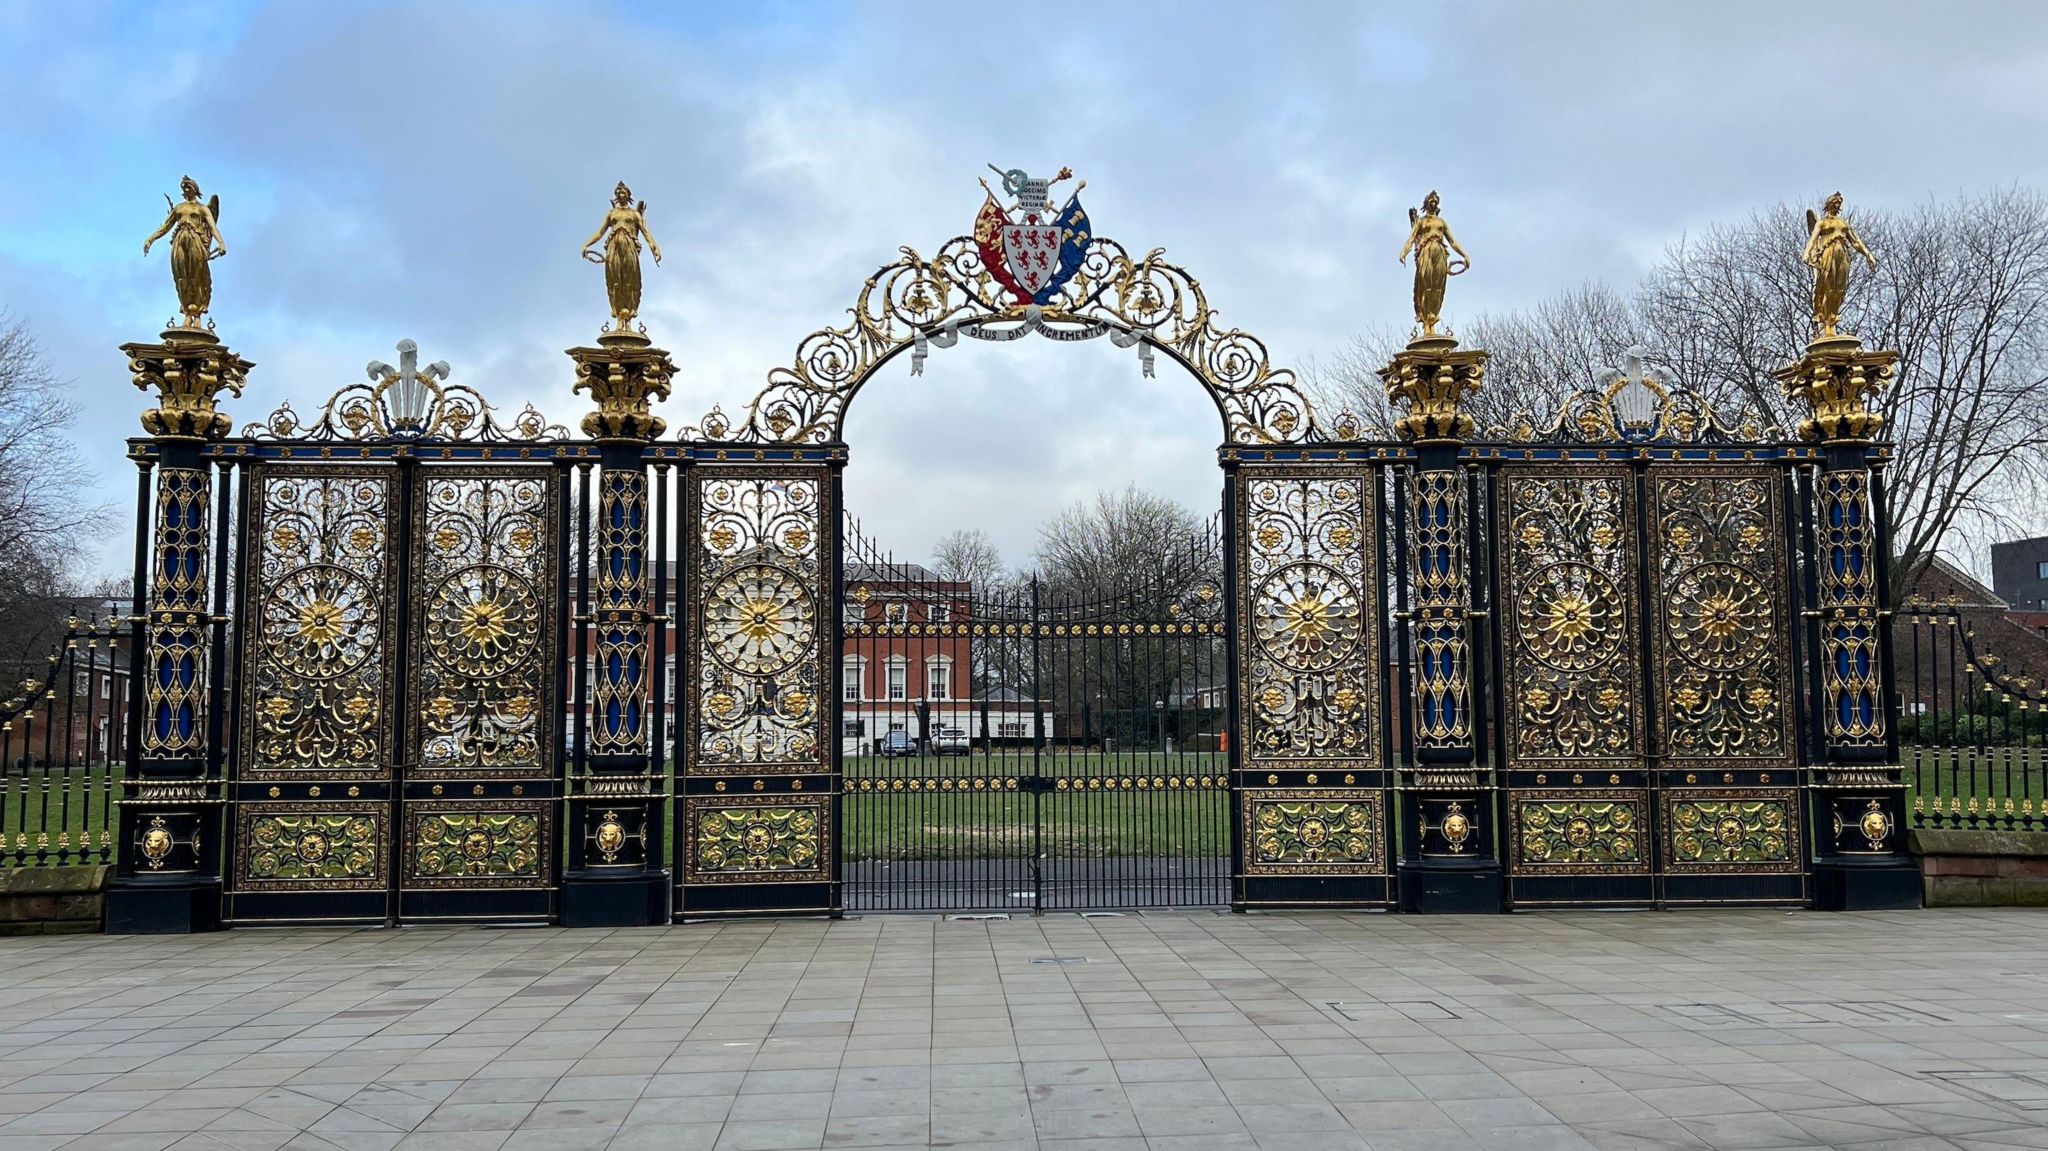 The golden gates of Warrington